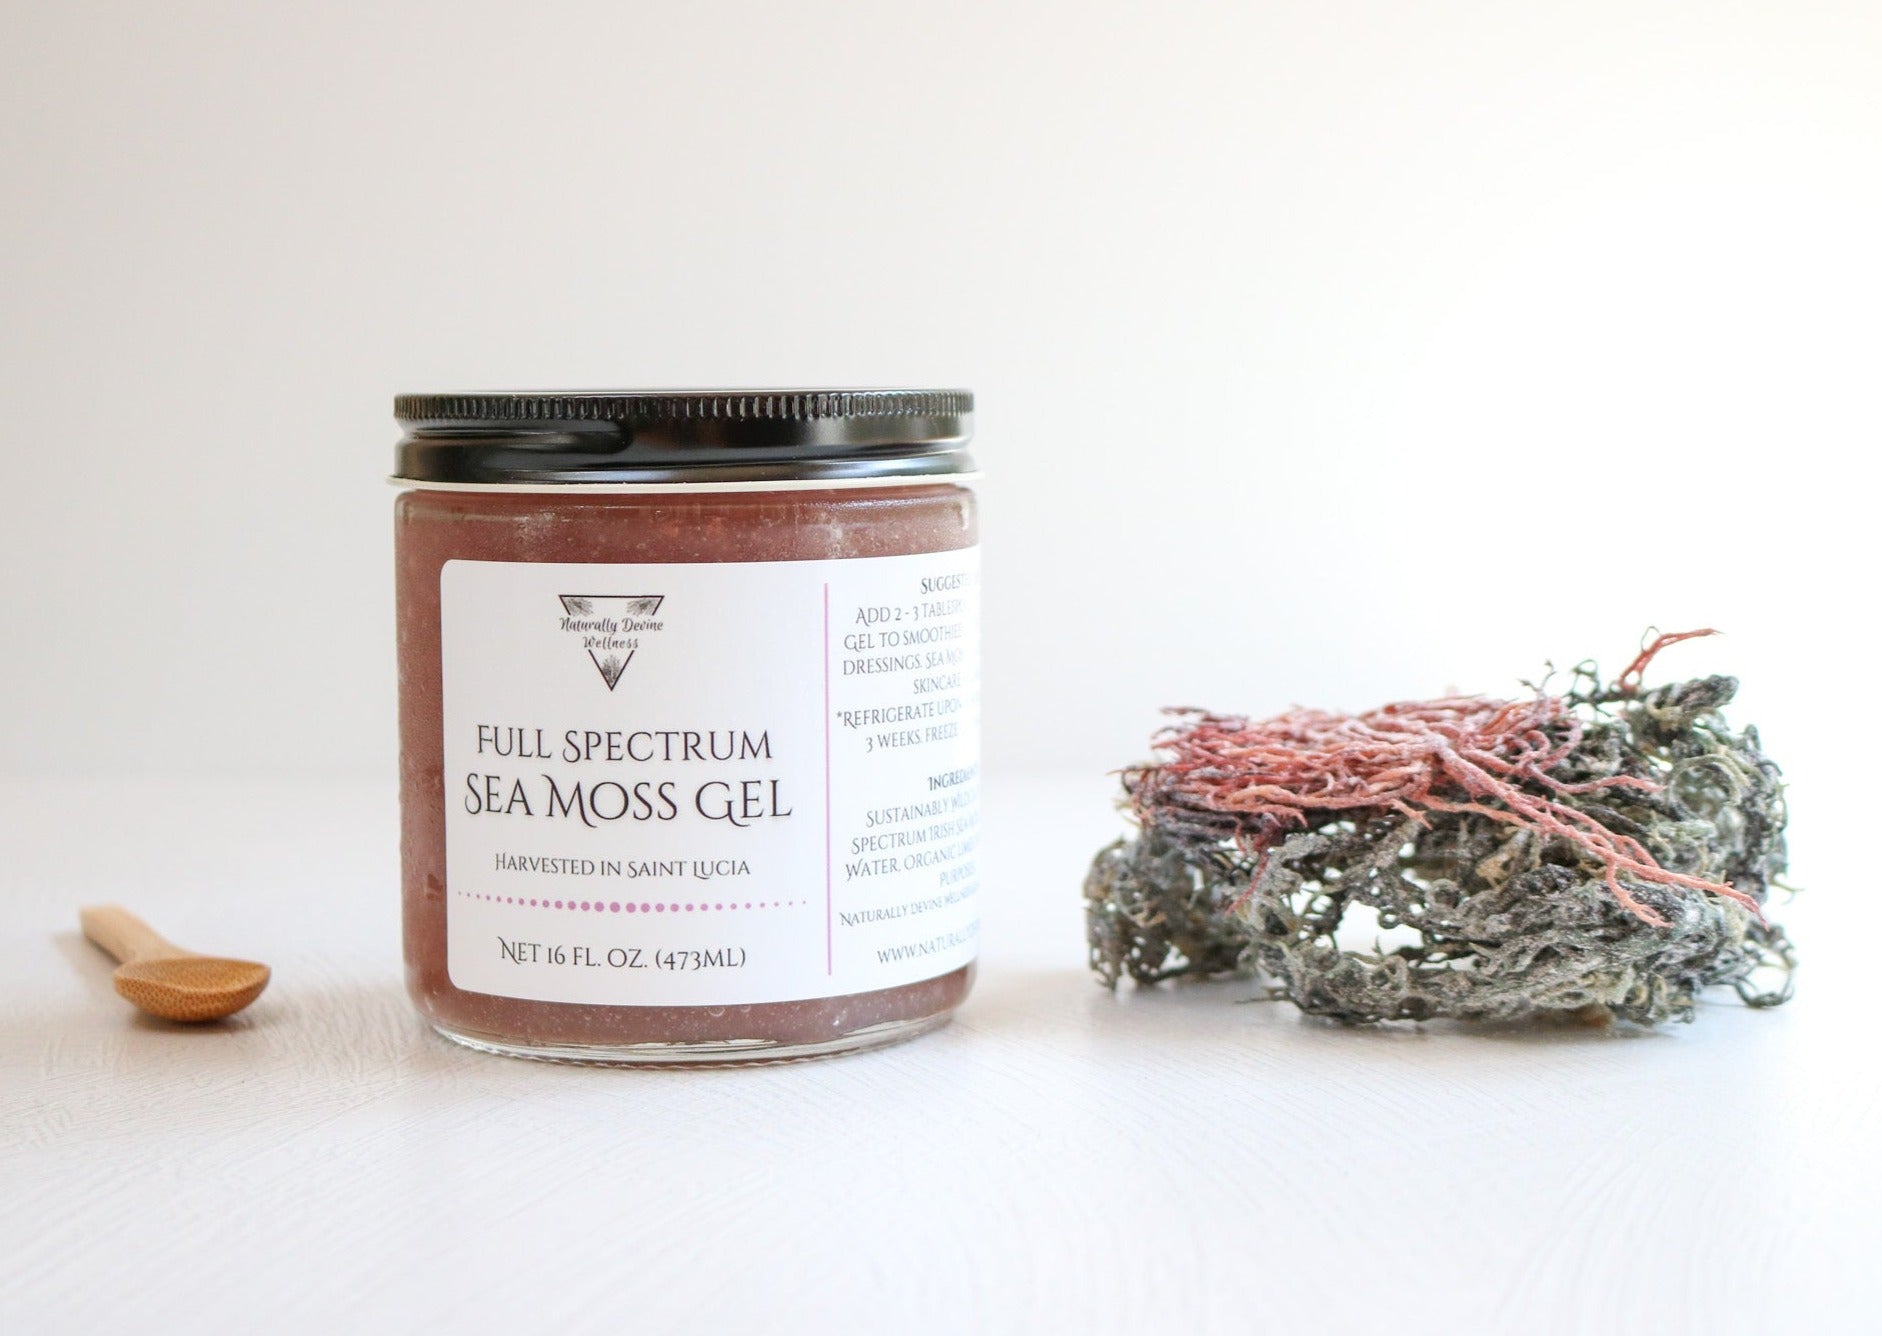 Full Spectrum Irish Sea Moss Gel - Naturally Devine Wellness Glen Allen VA